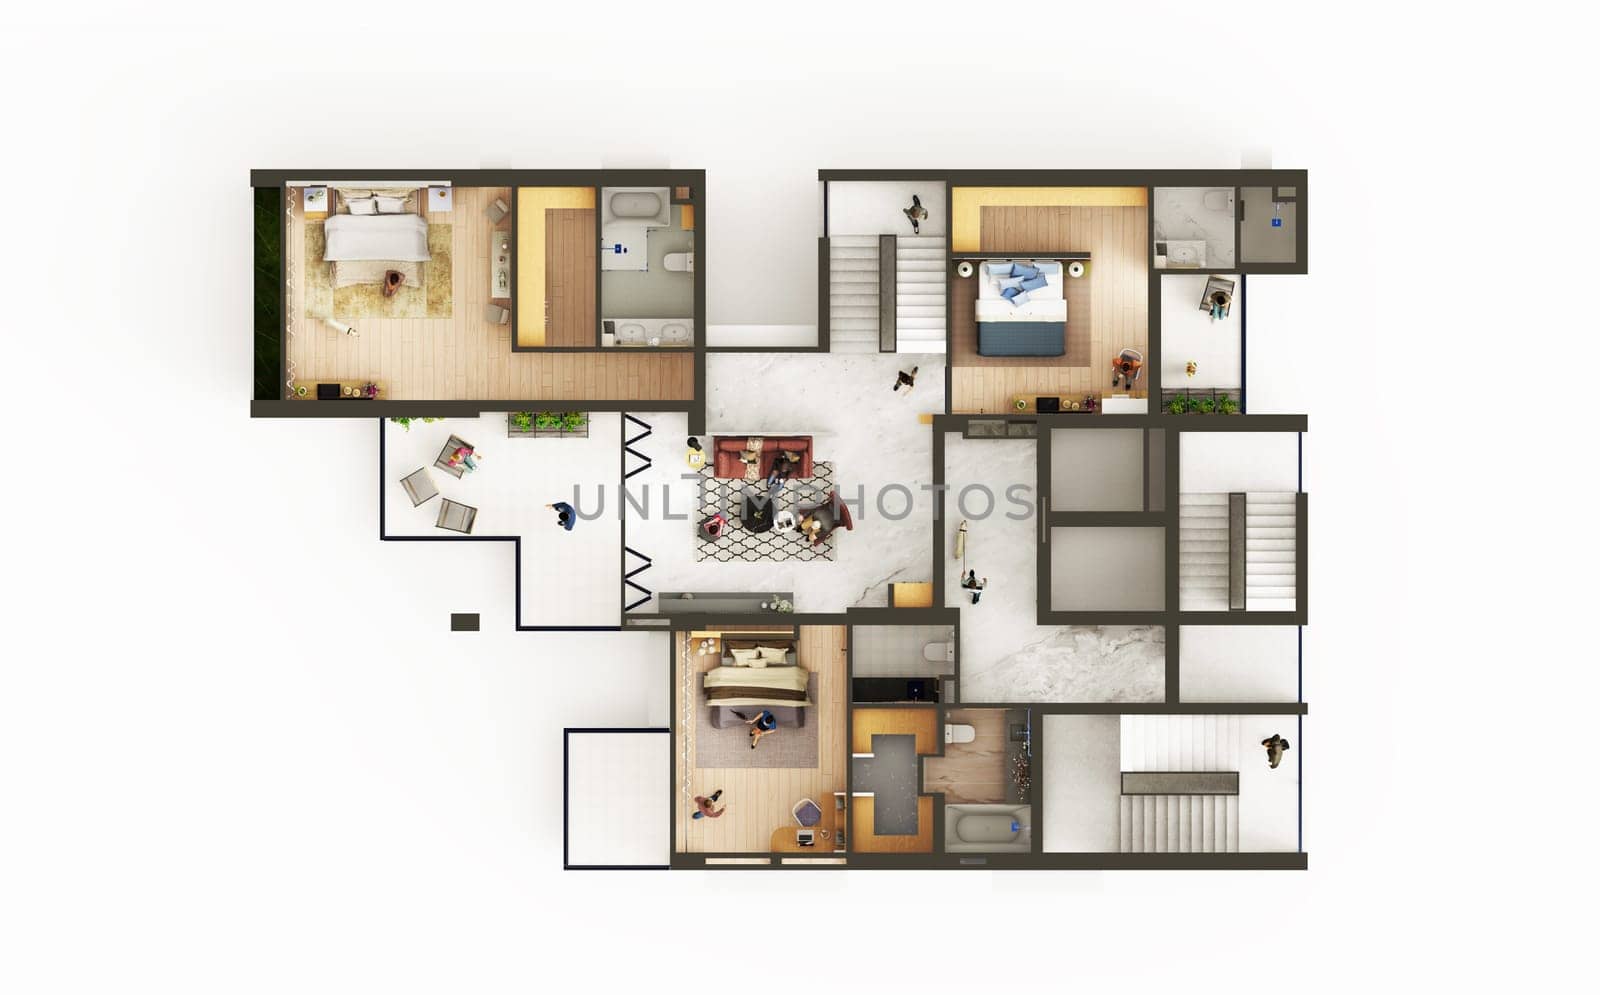 4 bedroom Duplex Apartment typical floor plan 2 by shawlinmohd